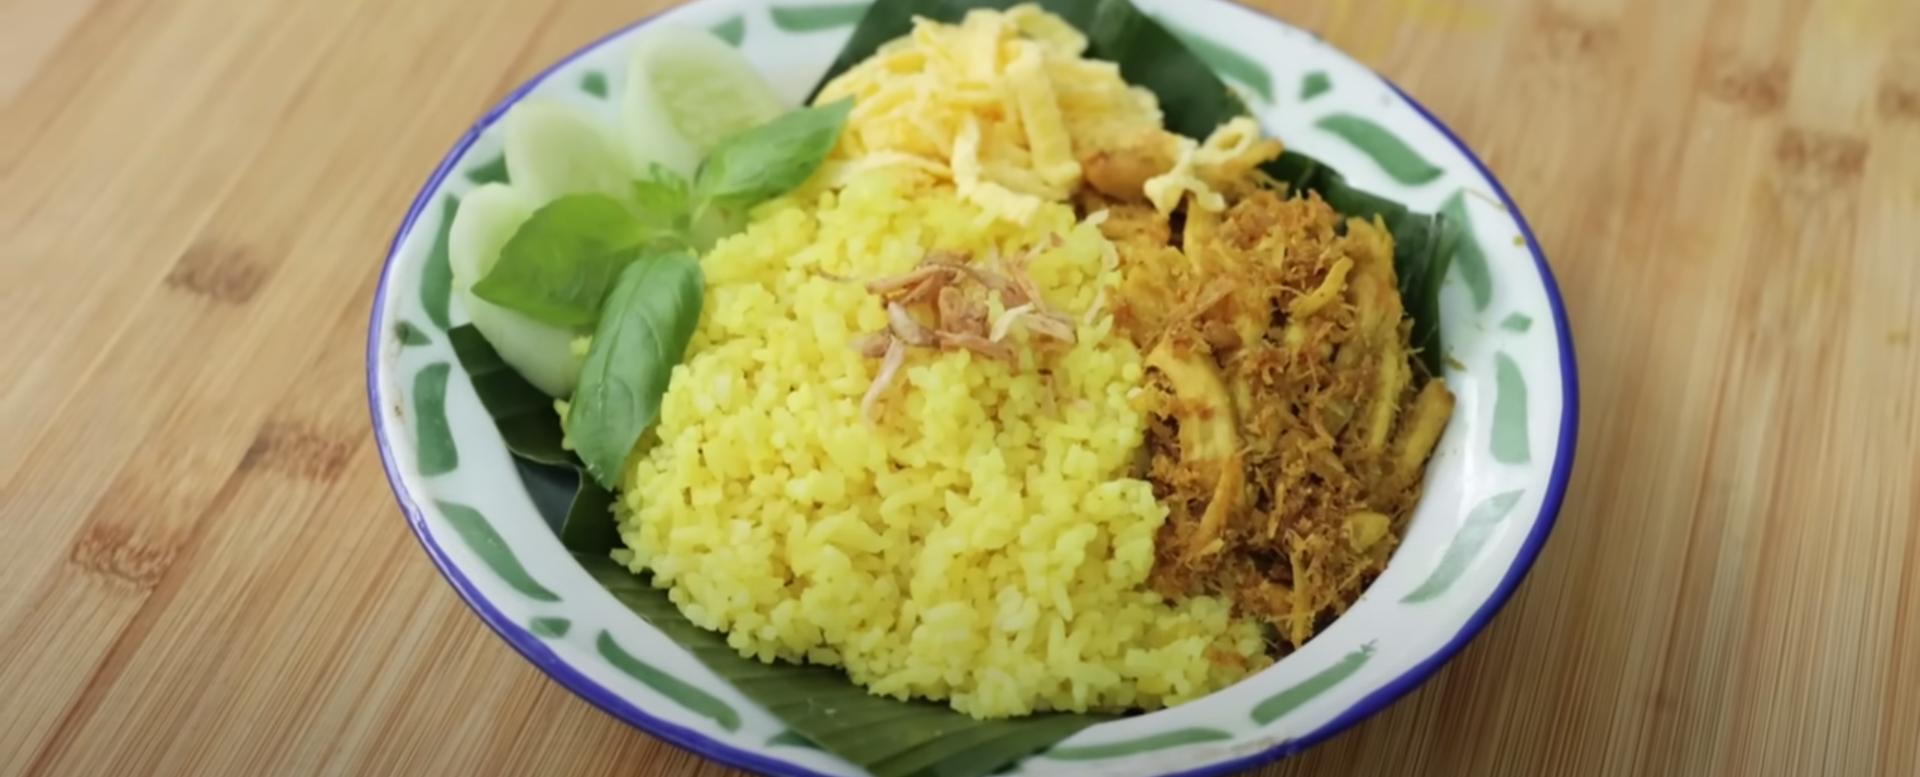 Resep Ayam Suir Serundeng Dan Nasi Kuning Rice Cooker Ala Chef Devina Hermawan